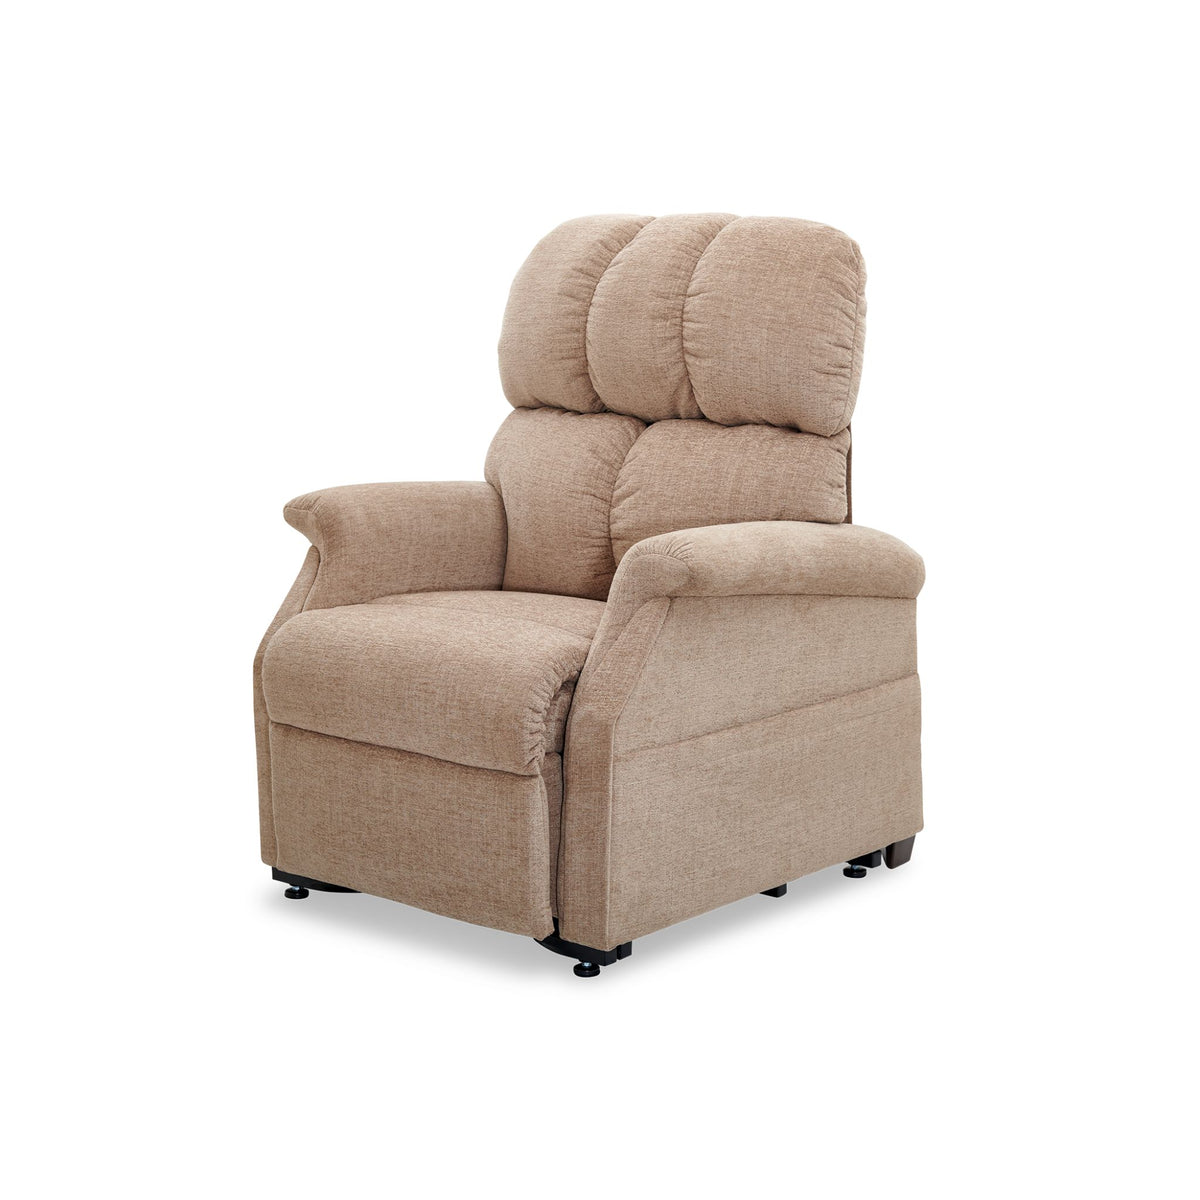 UltraComfort Junior Petite Lift Chair Recliner